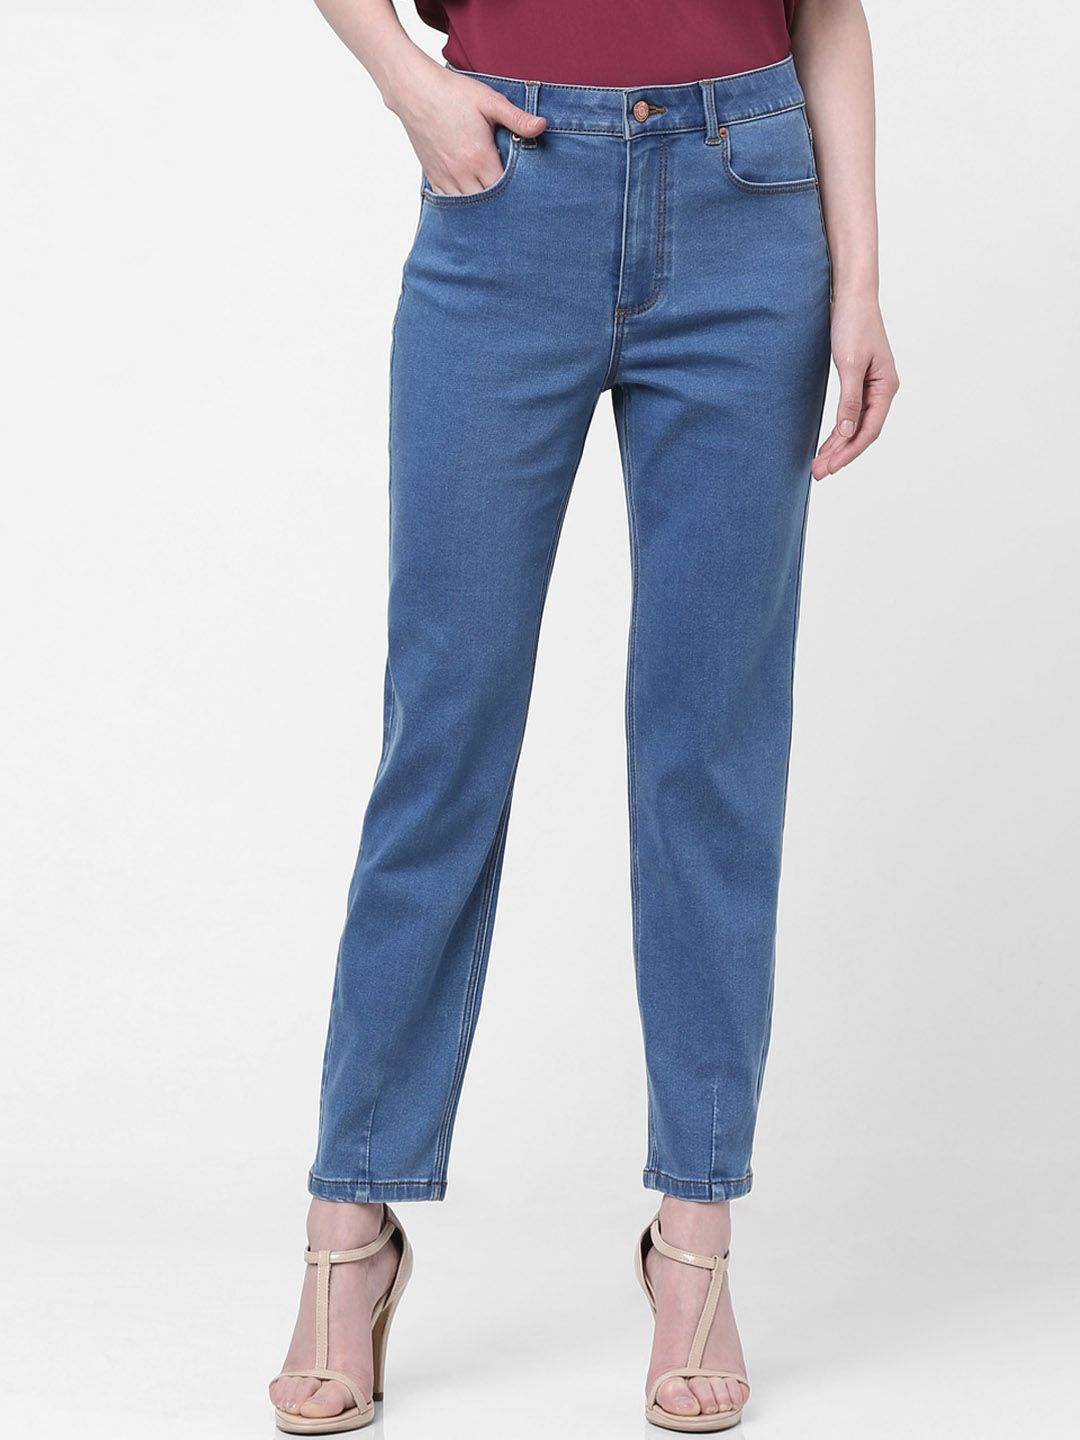 Vero Moda Women Blue Slim Fit High-Rise Jeans Price in India